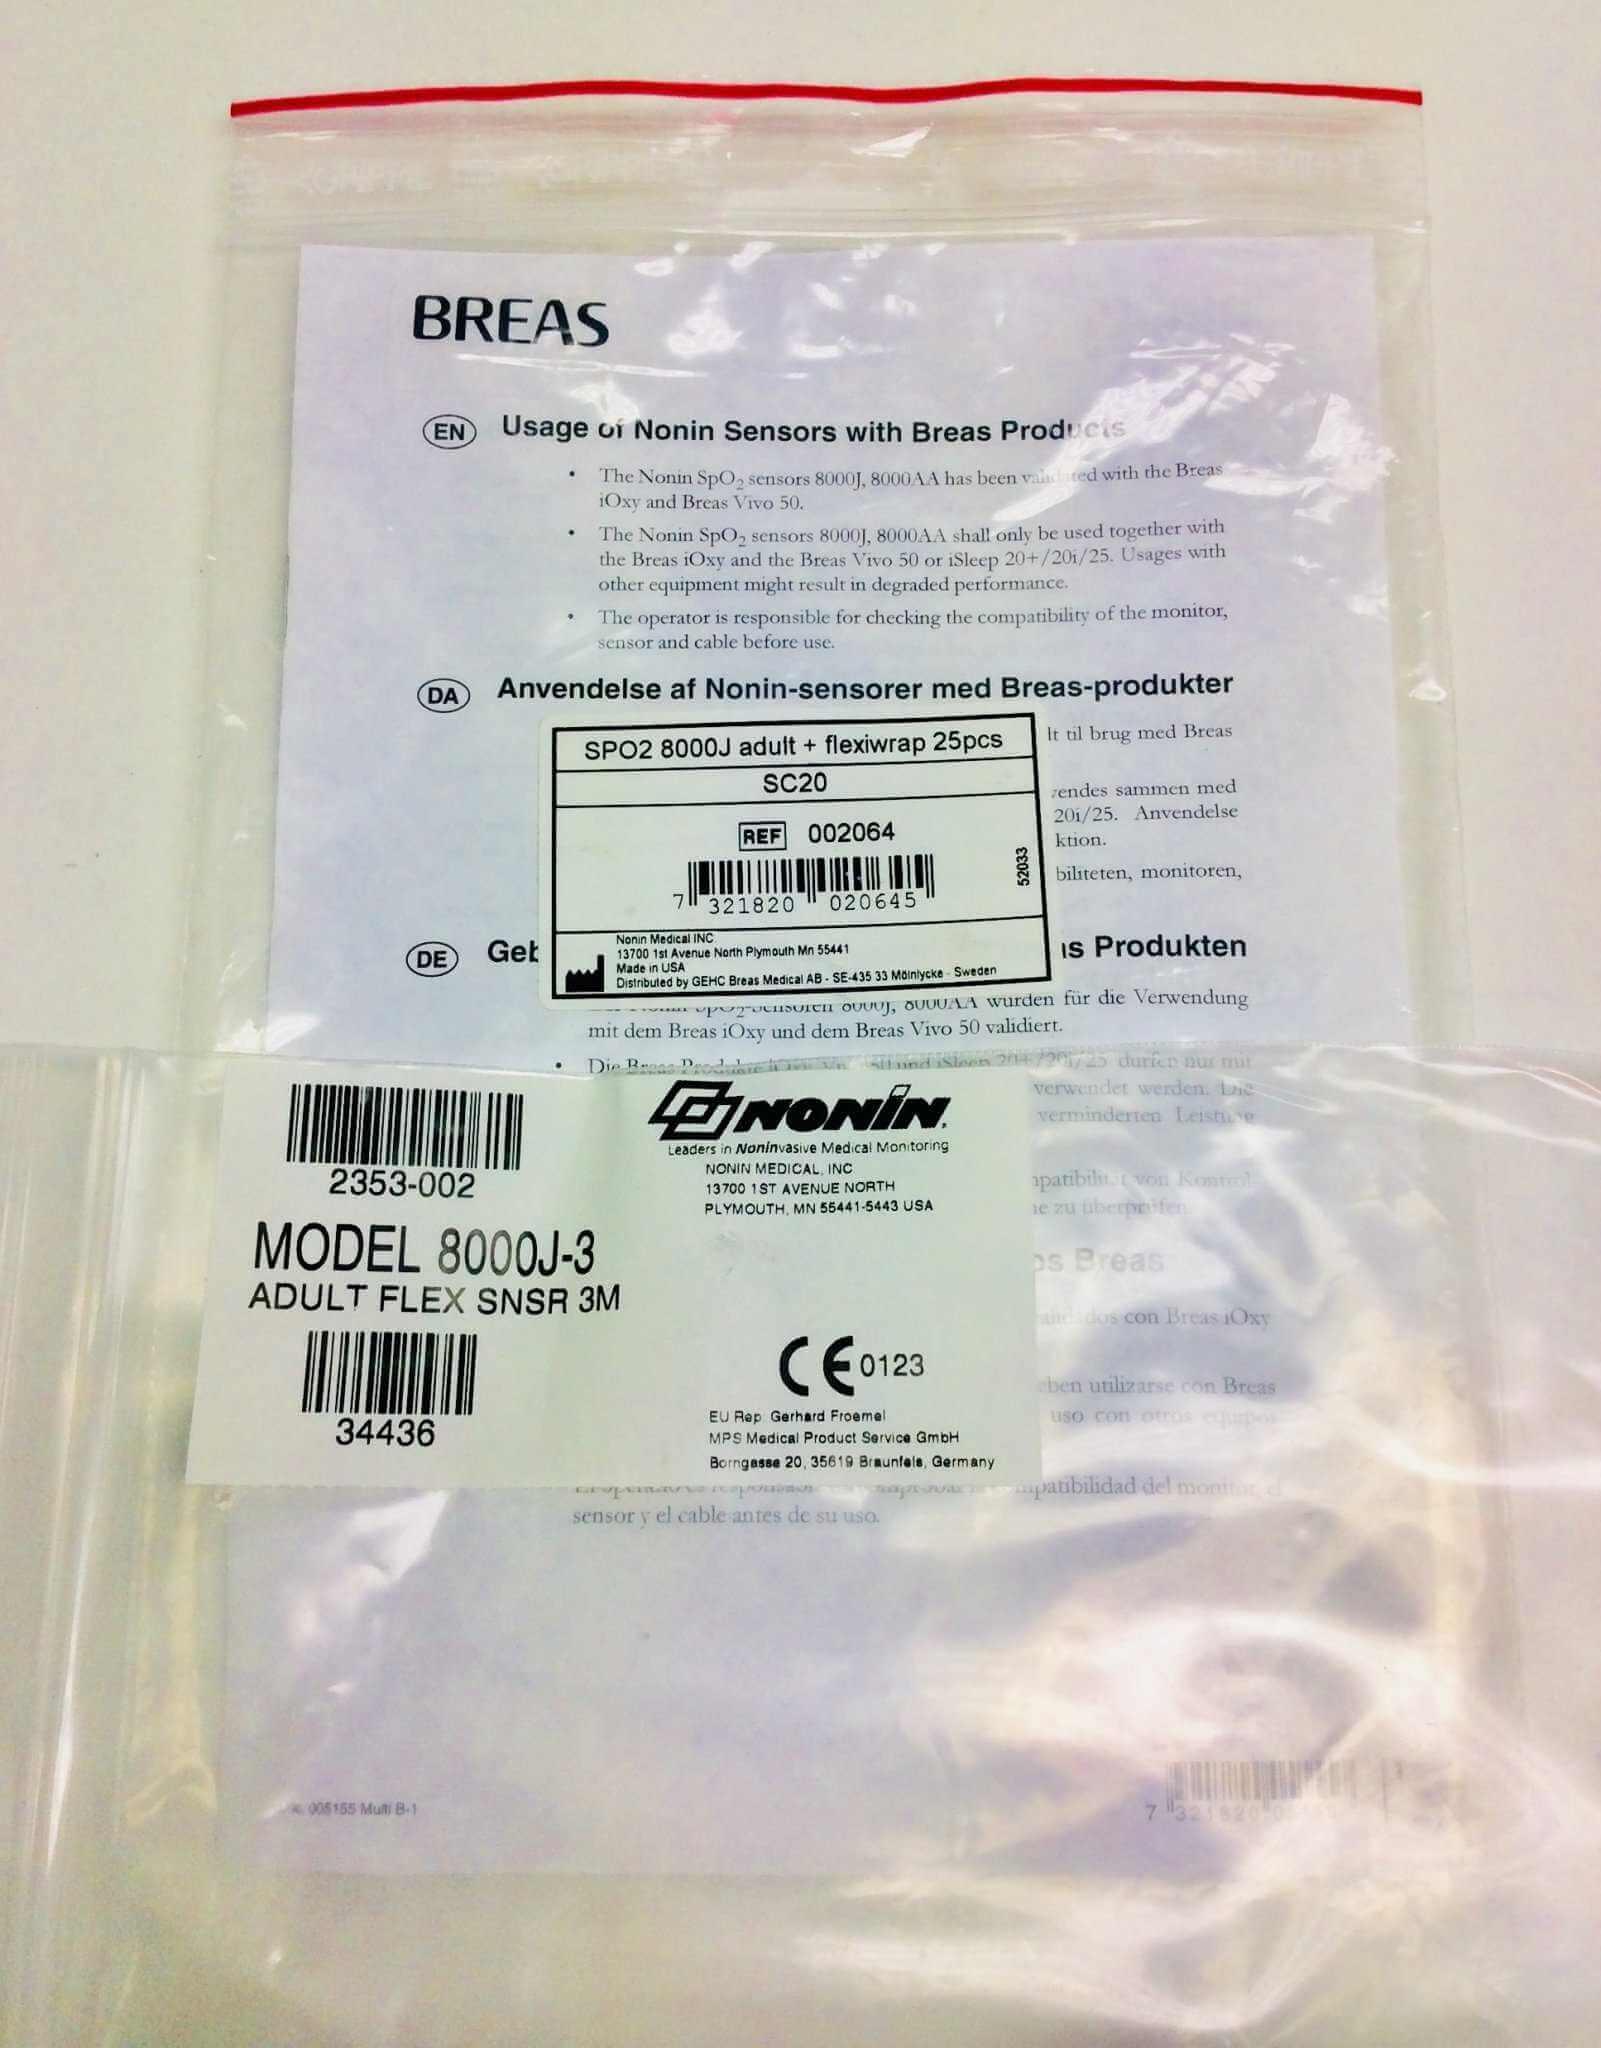 NEW Breas HDM Nonin SPO2 Adult Flex Sensor with Wraps 002064 34436 Warranty FREE Shipping - MBR Medicals